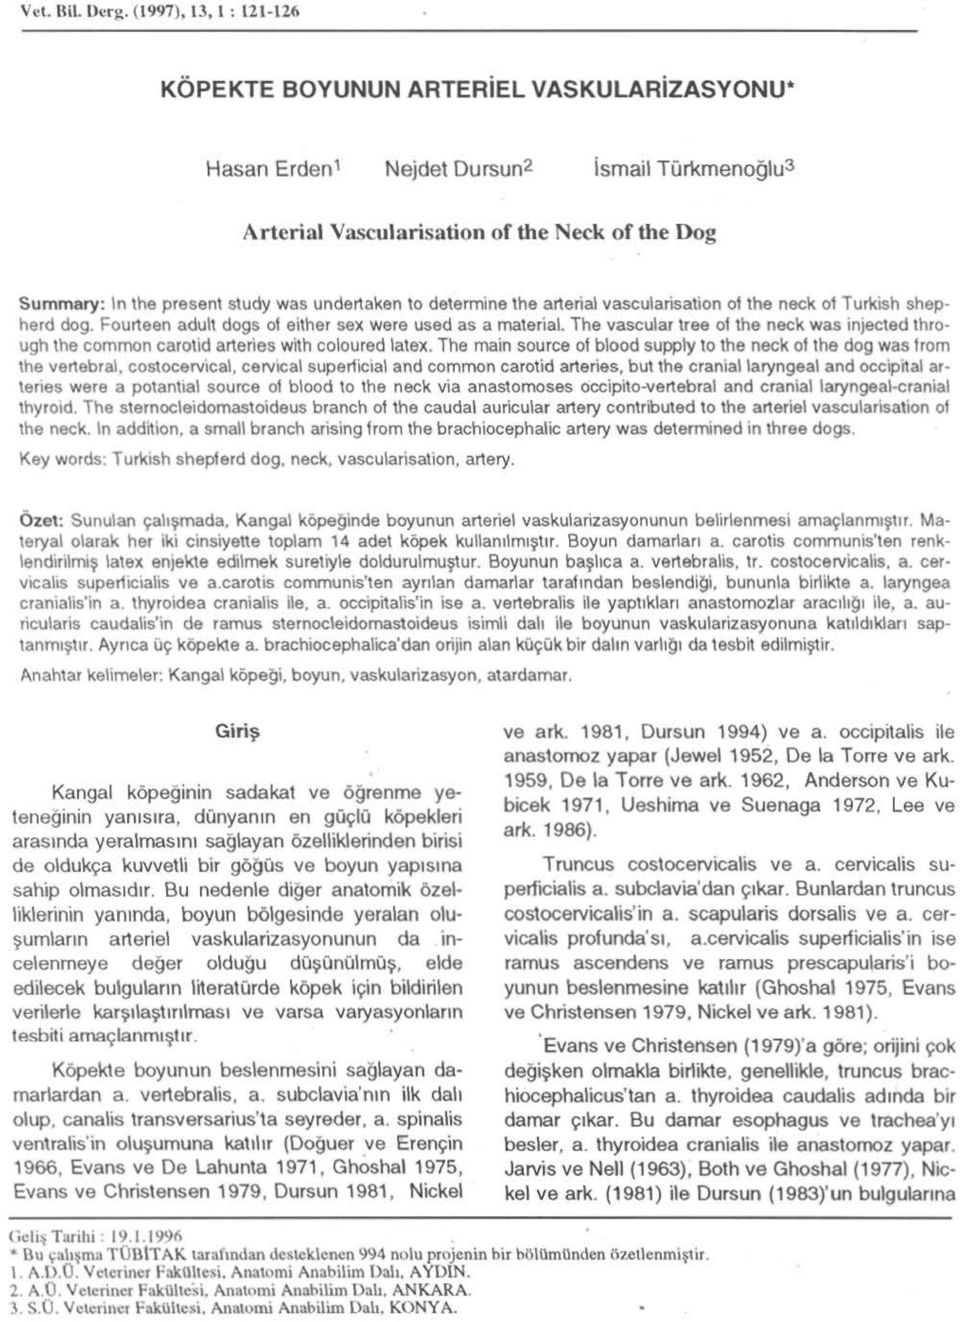 study was undertakan to determine the ane nal vascularisation ot the neck ol Turkish sneoherd OOg.